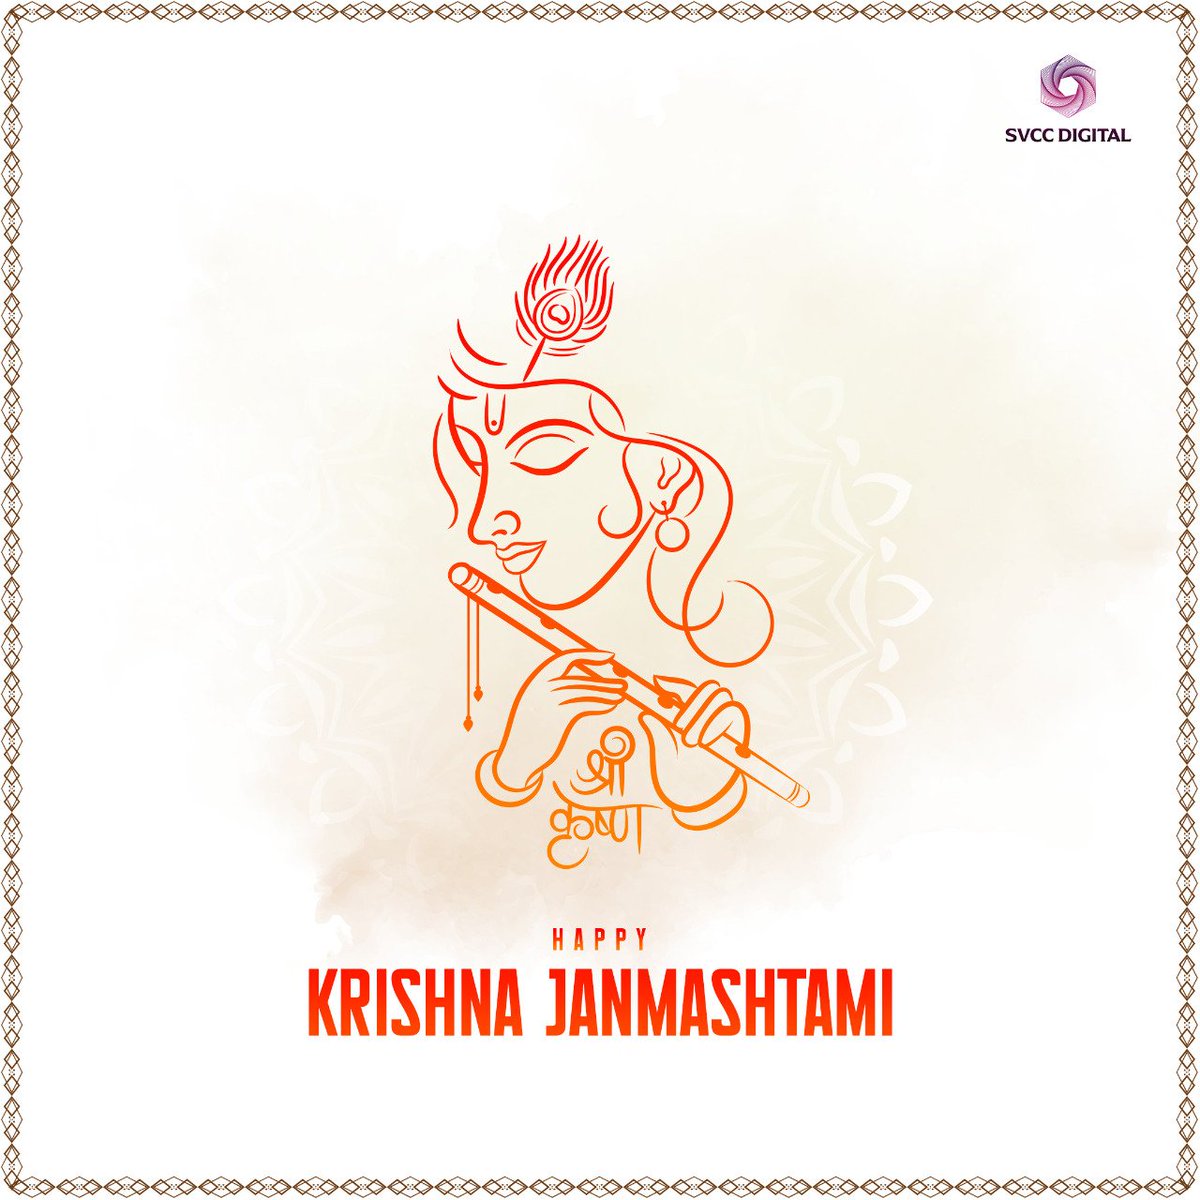 Wishing you all a Happy Krishna Janmashtami. #HappyJanmashtami